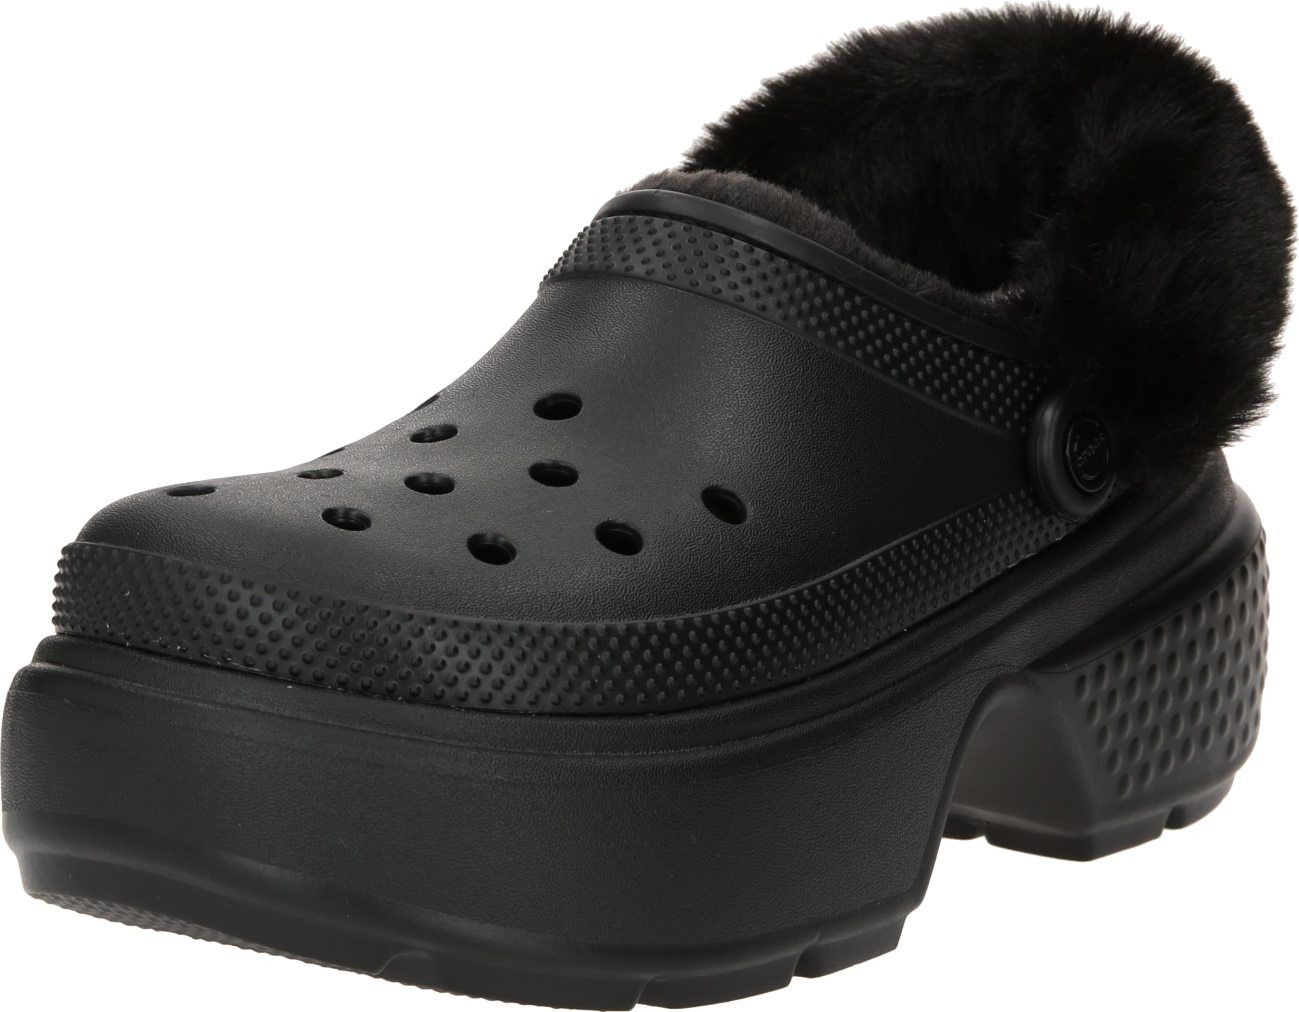 Pantofle Crocs černá